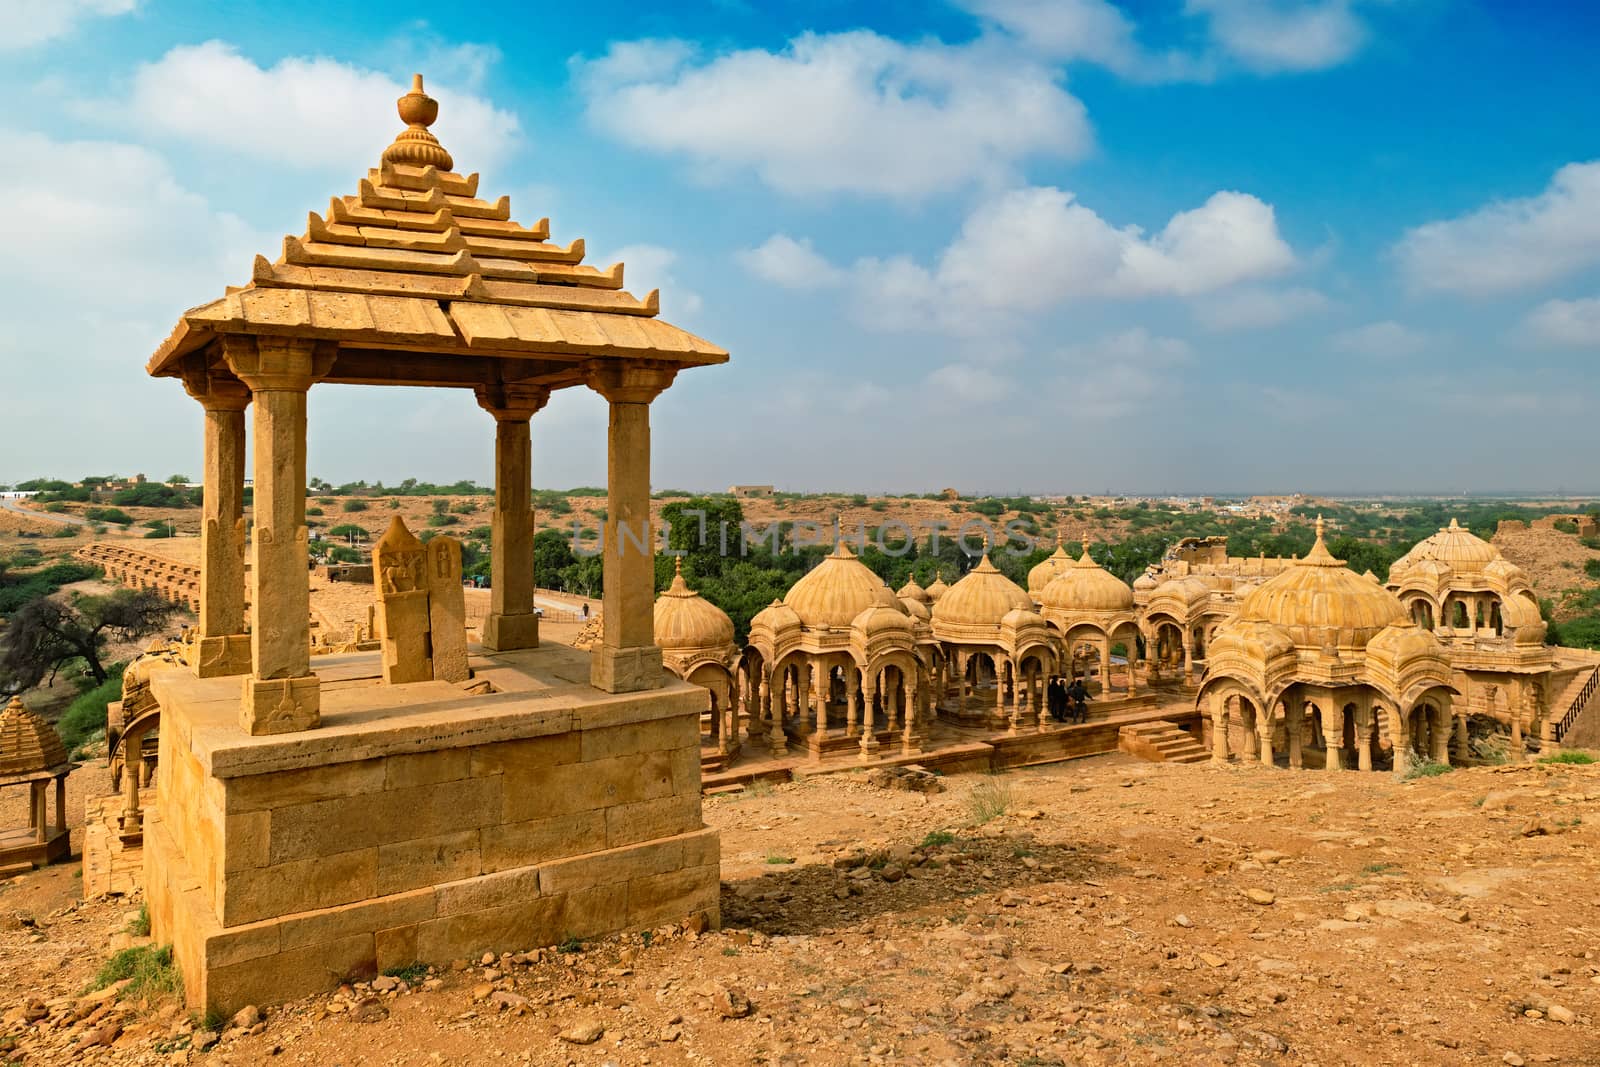 Bada Bagh cenotaphs Hindu tomb mausoleum . Jaisalmer, Rajasthan, India by dimol